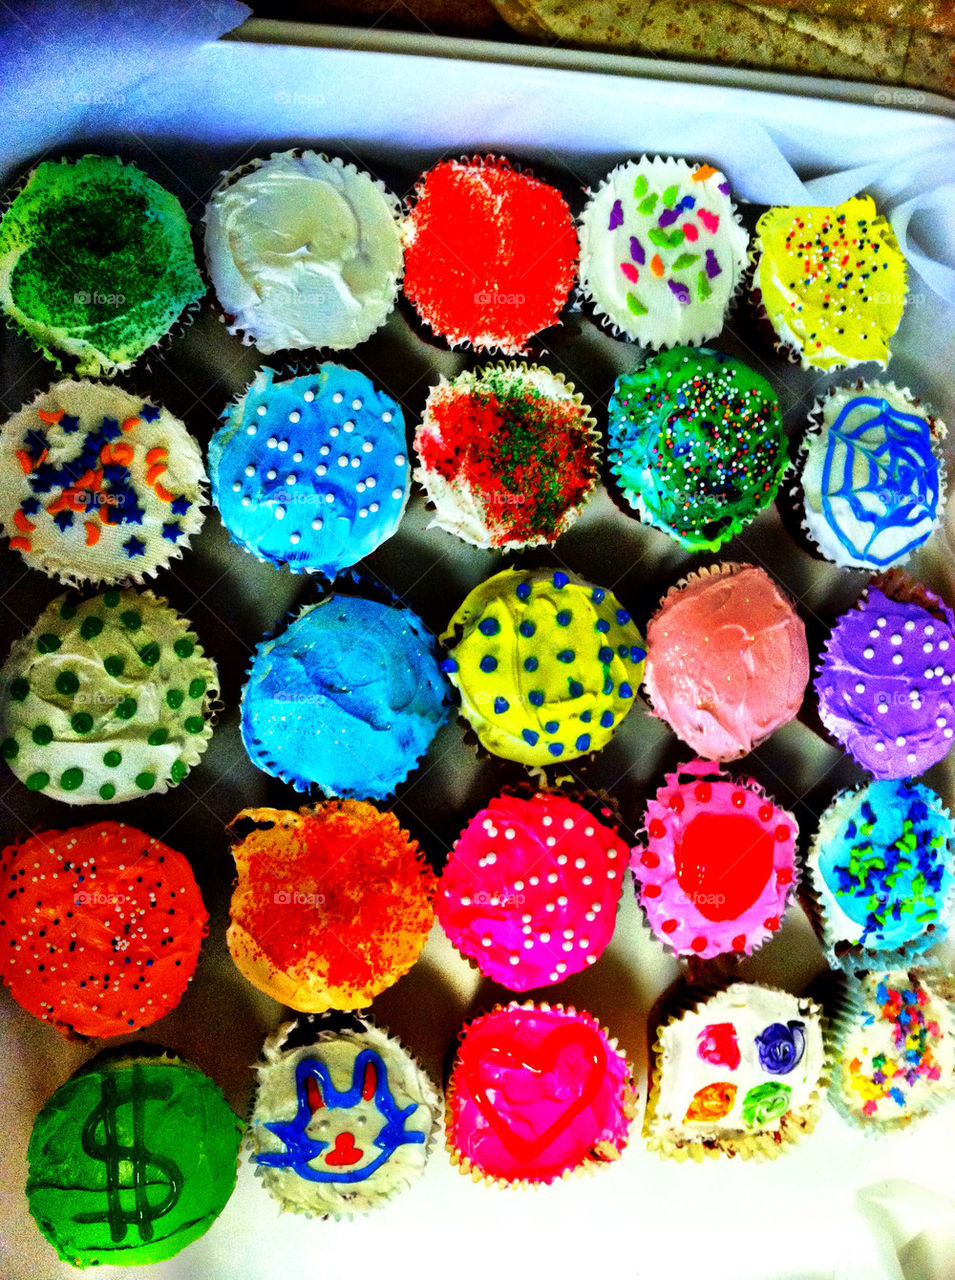 baking red cupcakes fun by kimikaboo